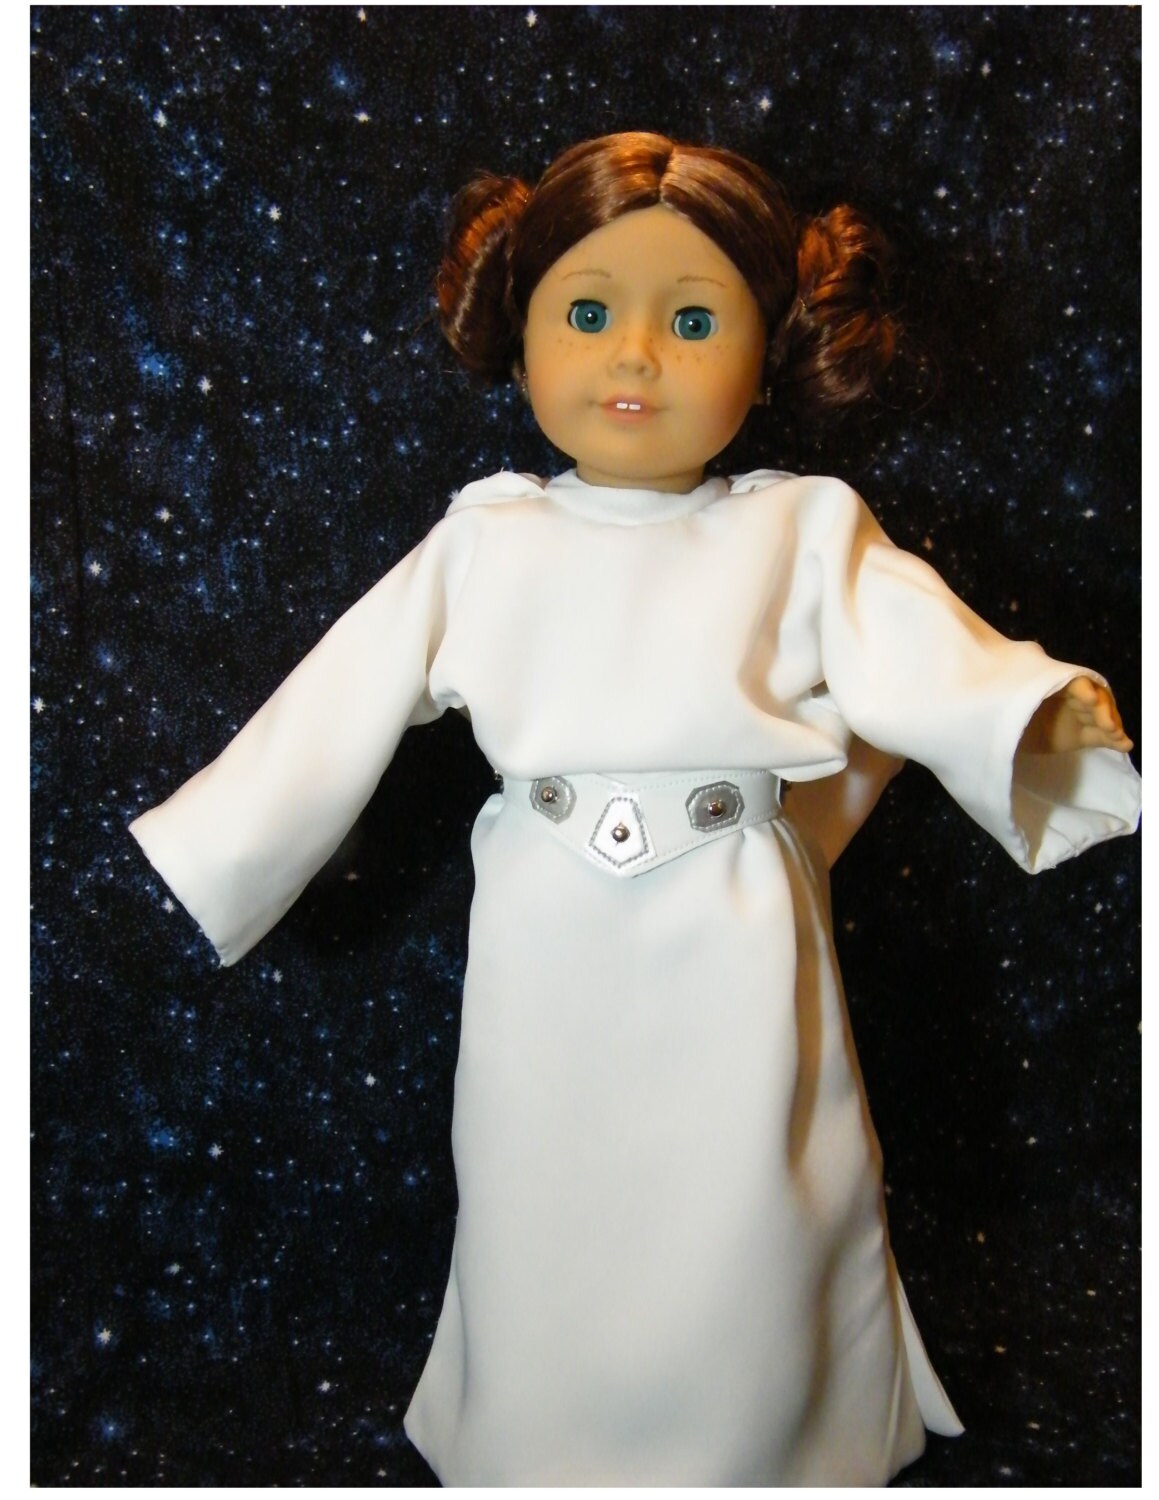 Princess Leia's Senatorial Gown and Go-to Go-go Boot - Etsy